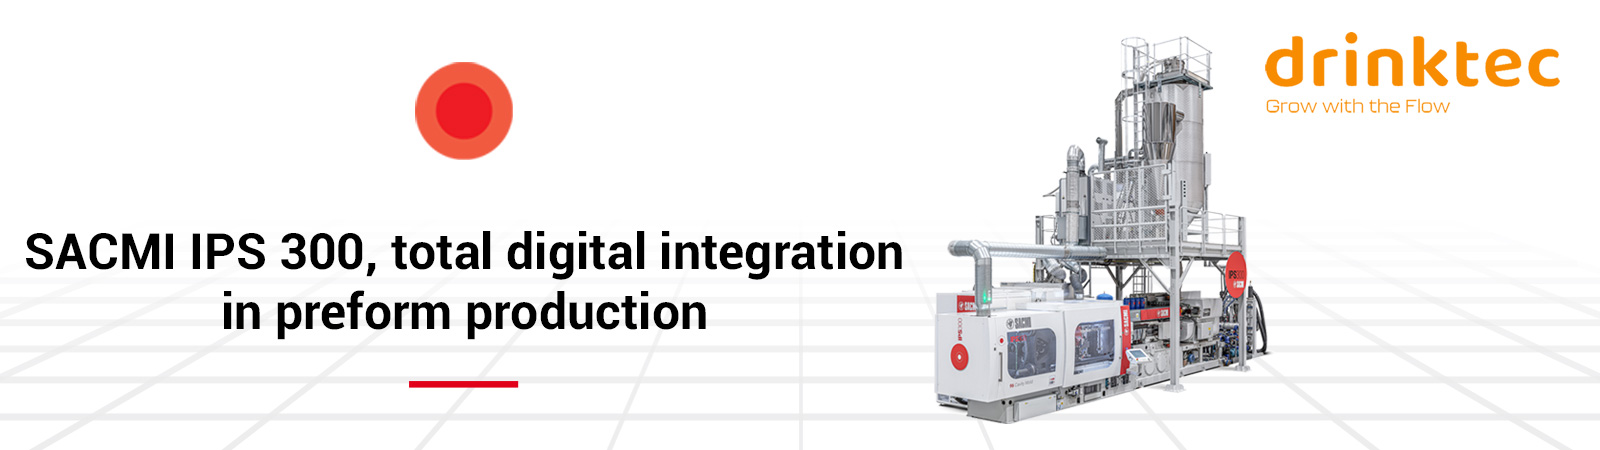 SACMI IPS 300, total digital integration in preform production 